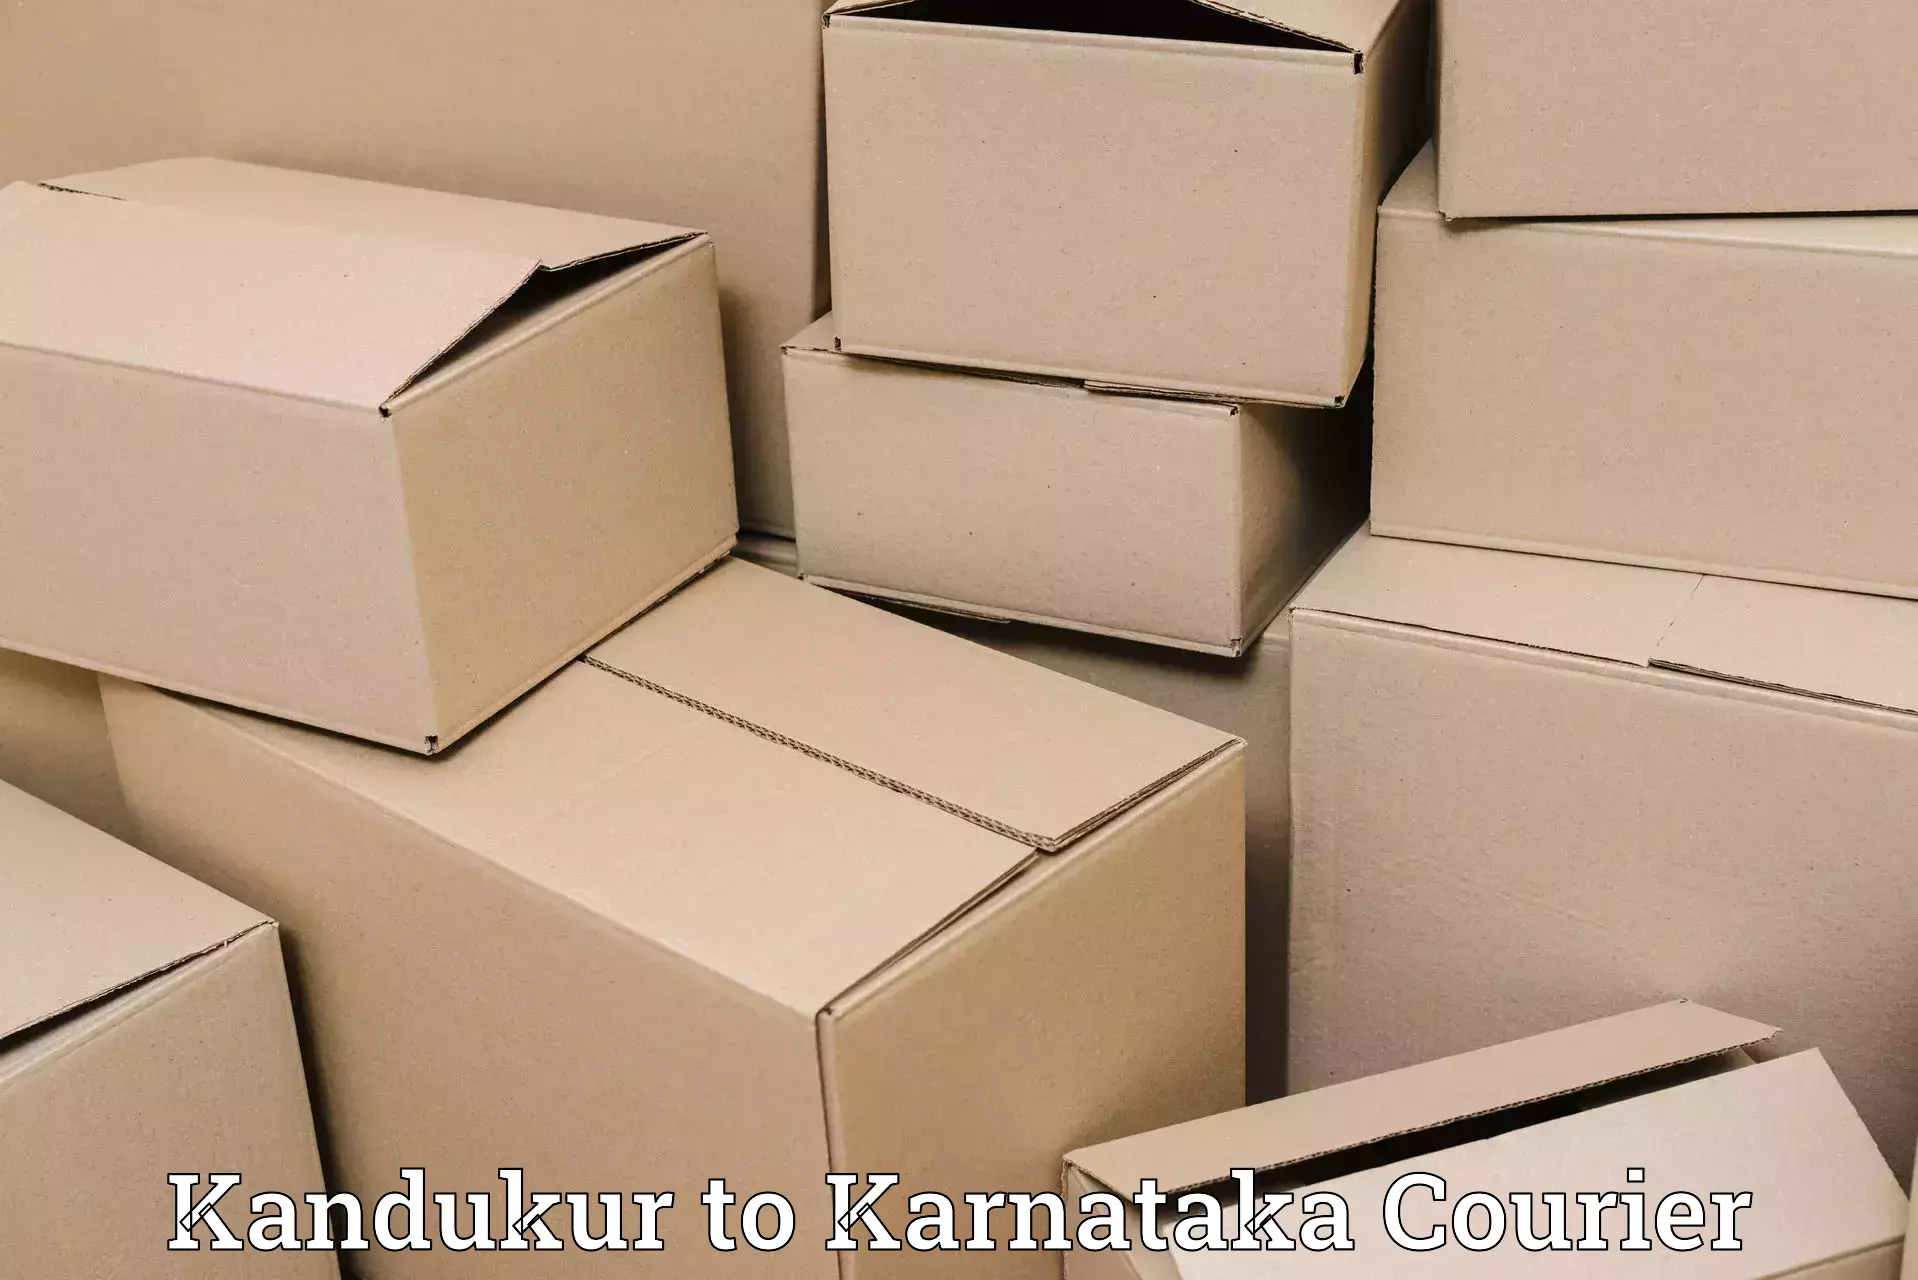 Enhanced delivery experience Kandukur to Karnataka